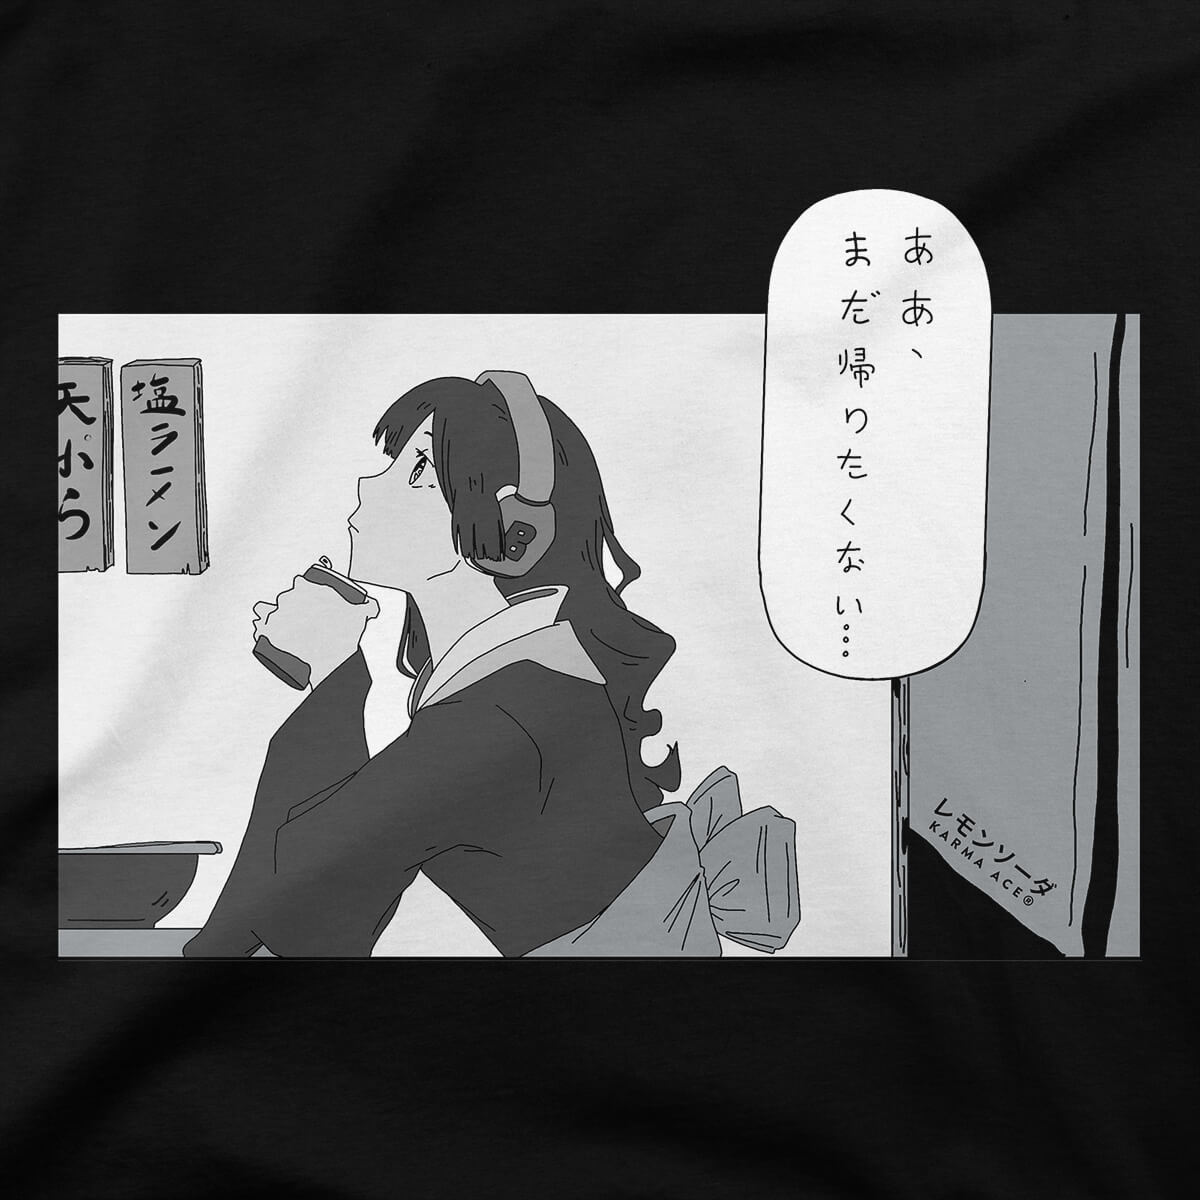 Karma Ace: "Kimono Bar" by レモンソーダ - Unisex organic cotton t-shirt - Karma Ace